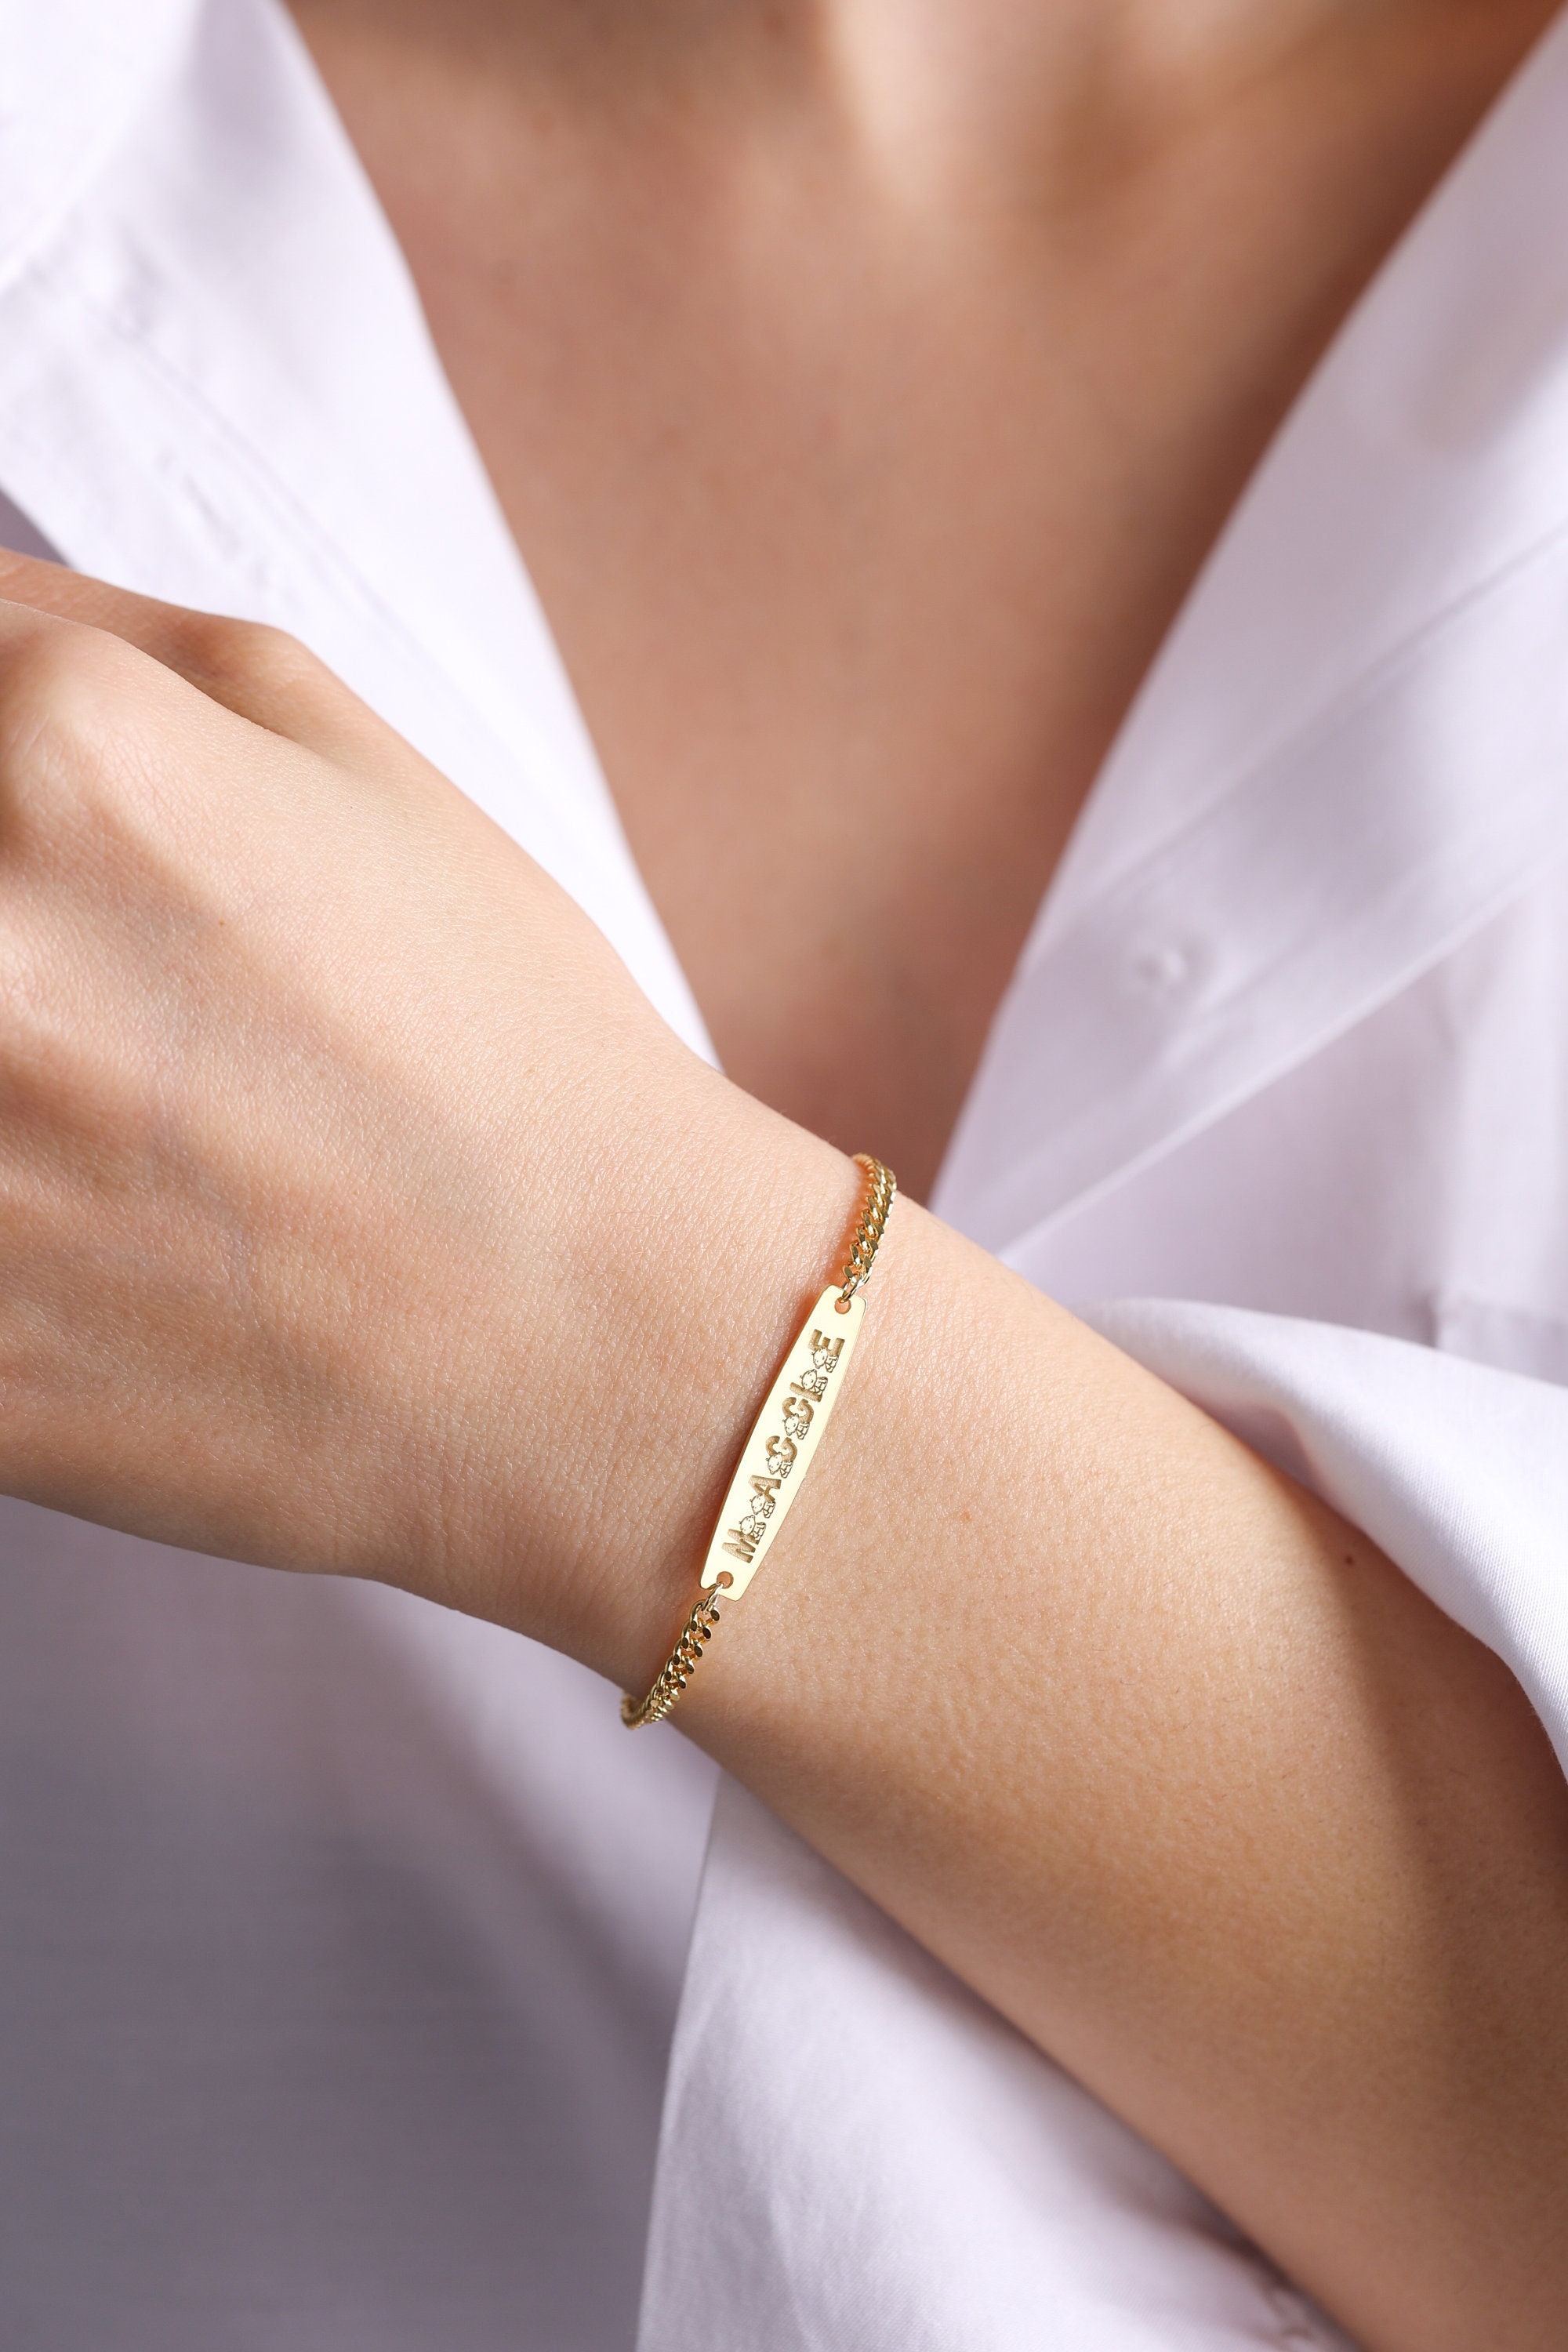 Buy 24k Gold Baby Ring 99.9% Pure Gold Birthday Bracelet 5.62 Grams 1.5 돈  돌팔지 Online in India - Etsy